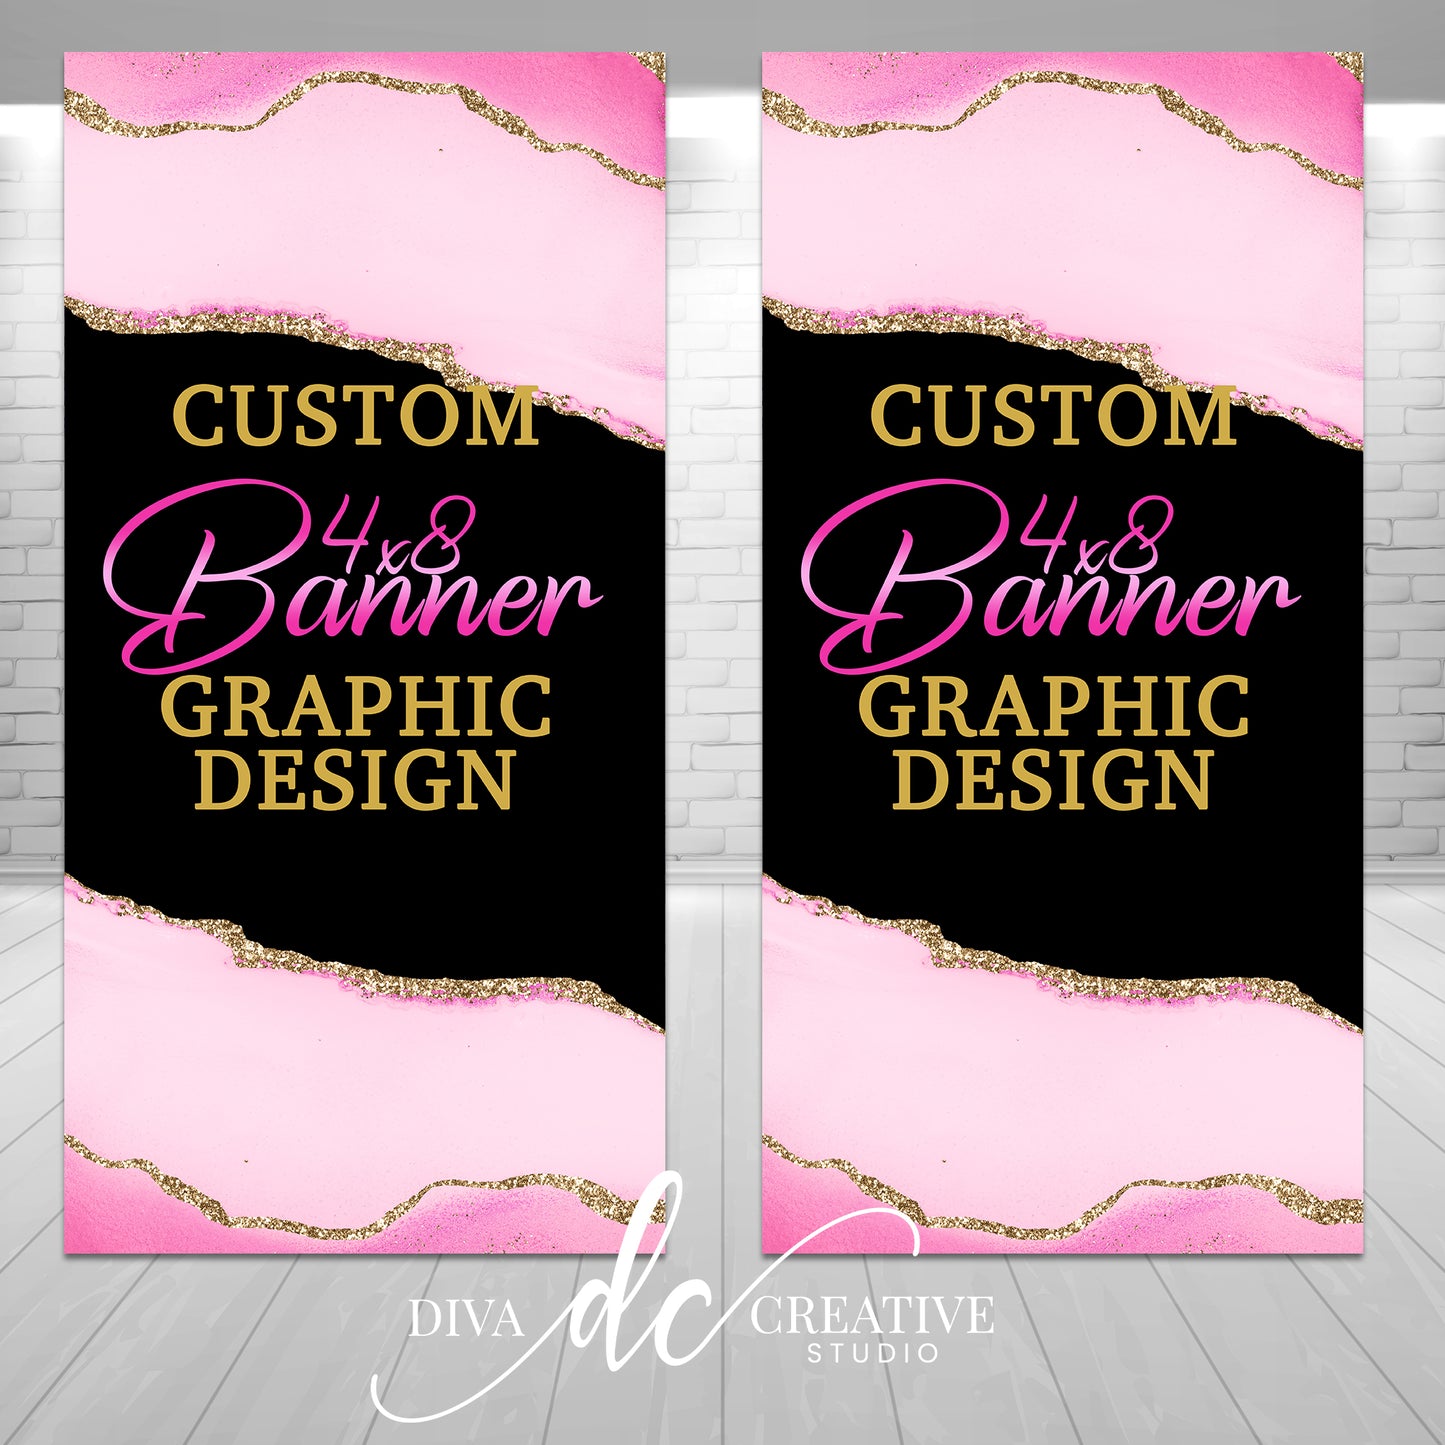 Custom Design 4x8 Banner Print and Ship